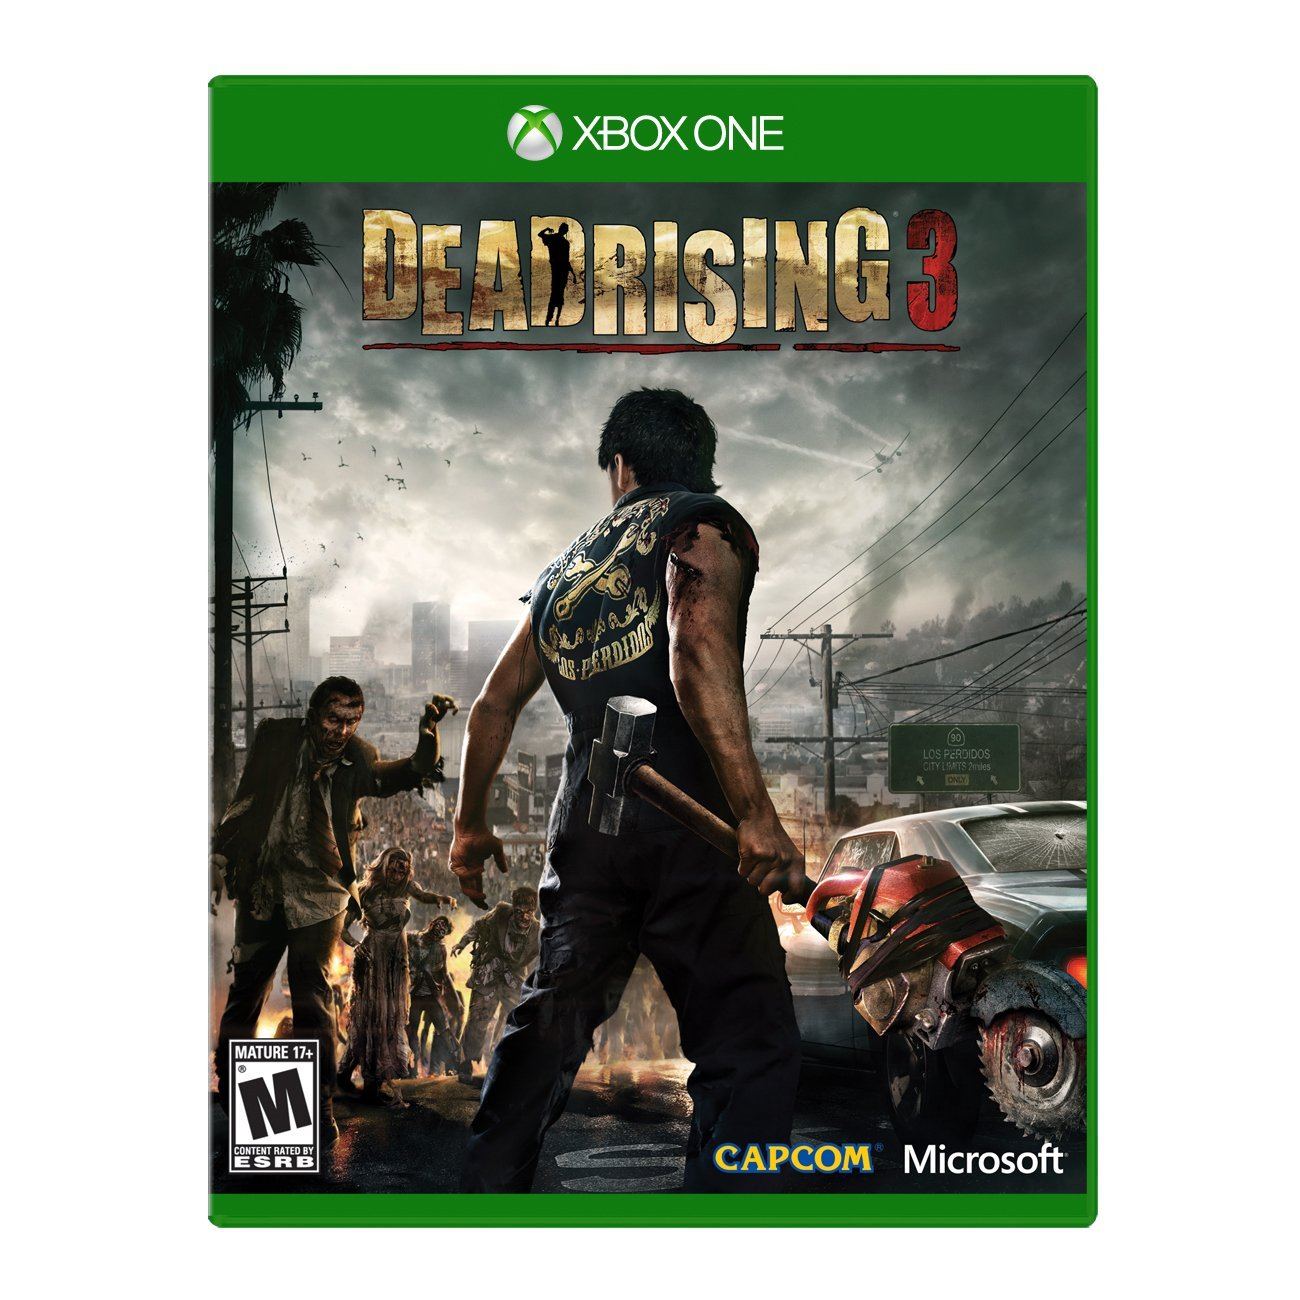 Dead Rising Xbox 360 Trailer - Official Trailer 